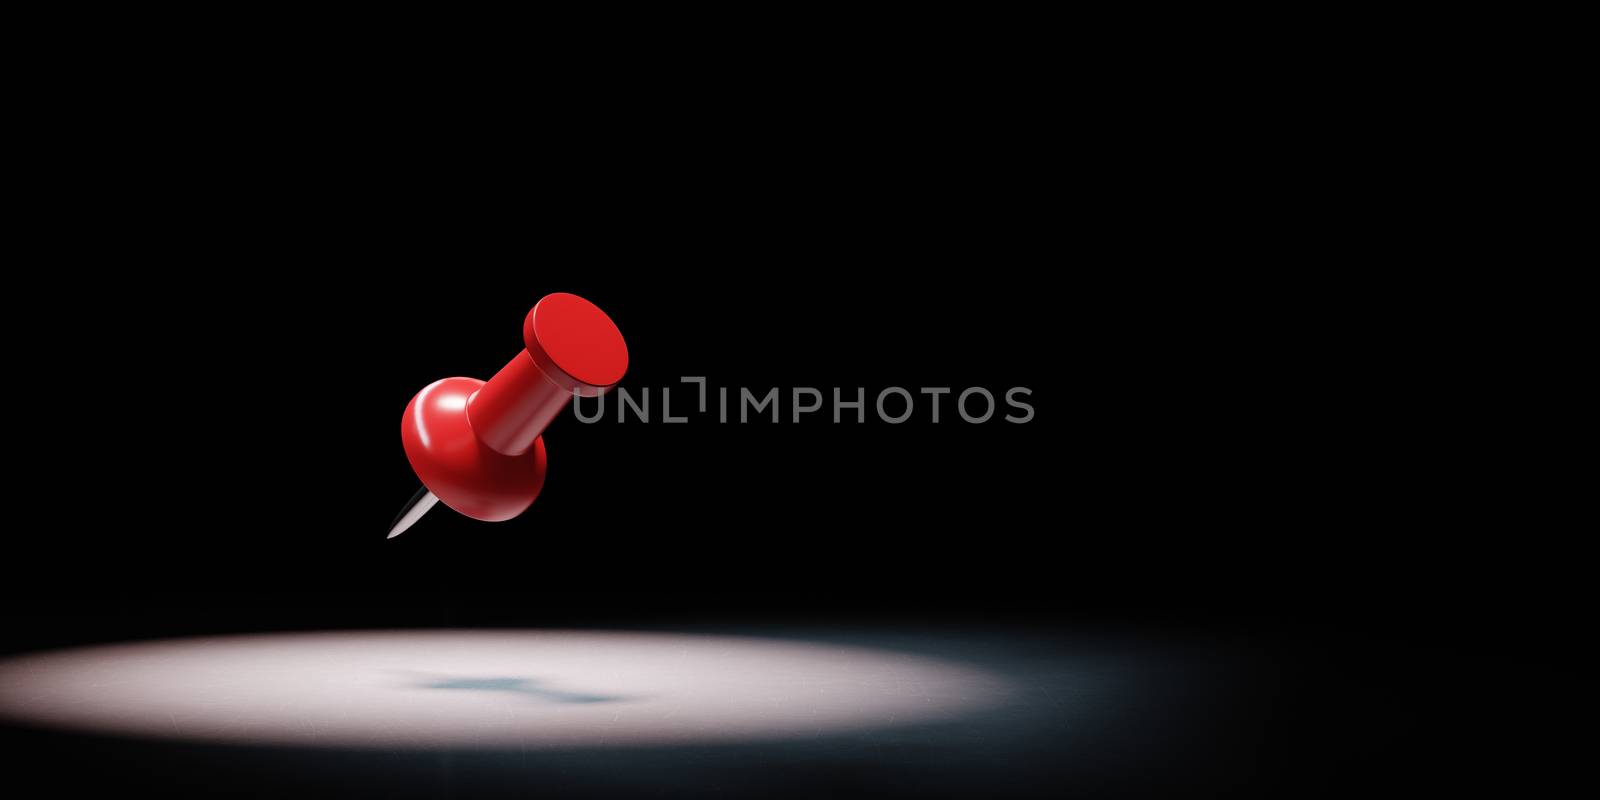 Single Red Pushpin Spotlighted on Black Background 3D Illustration by make